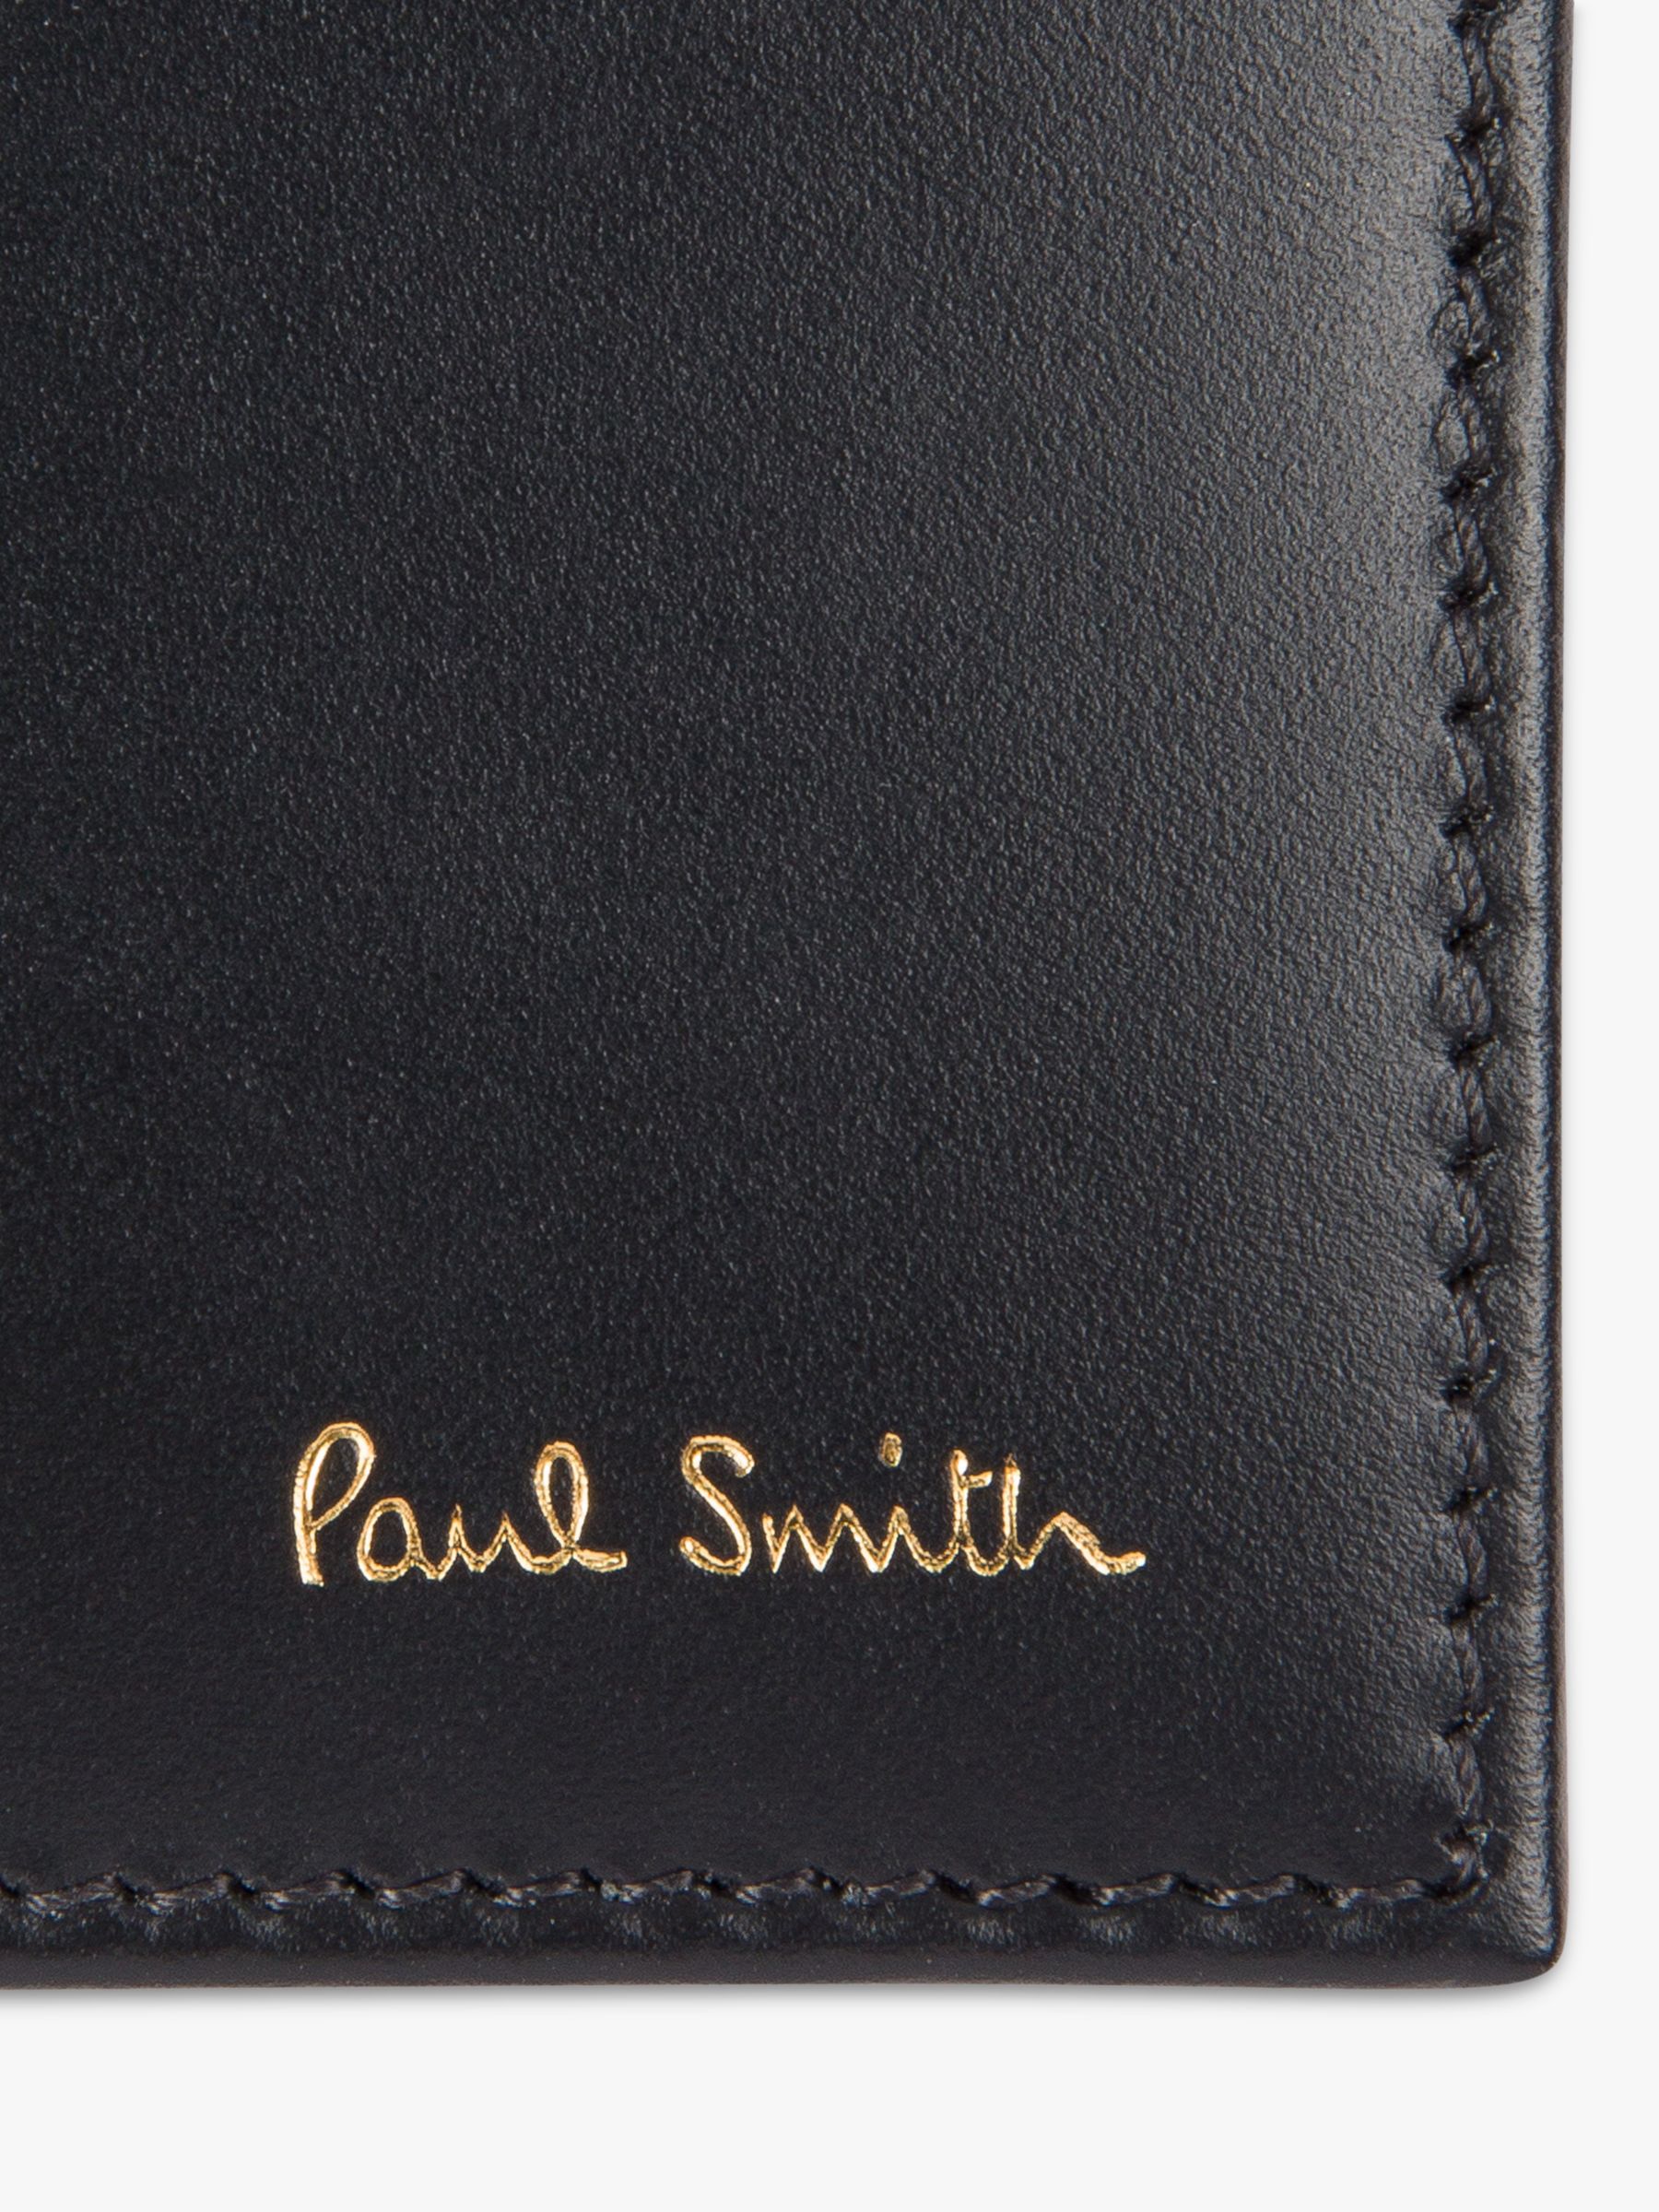 Paul Smith Interior Signature Stripe Leather Wallet, Black at John ...